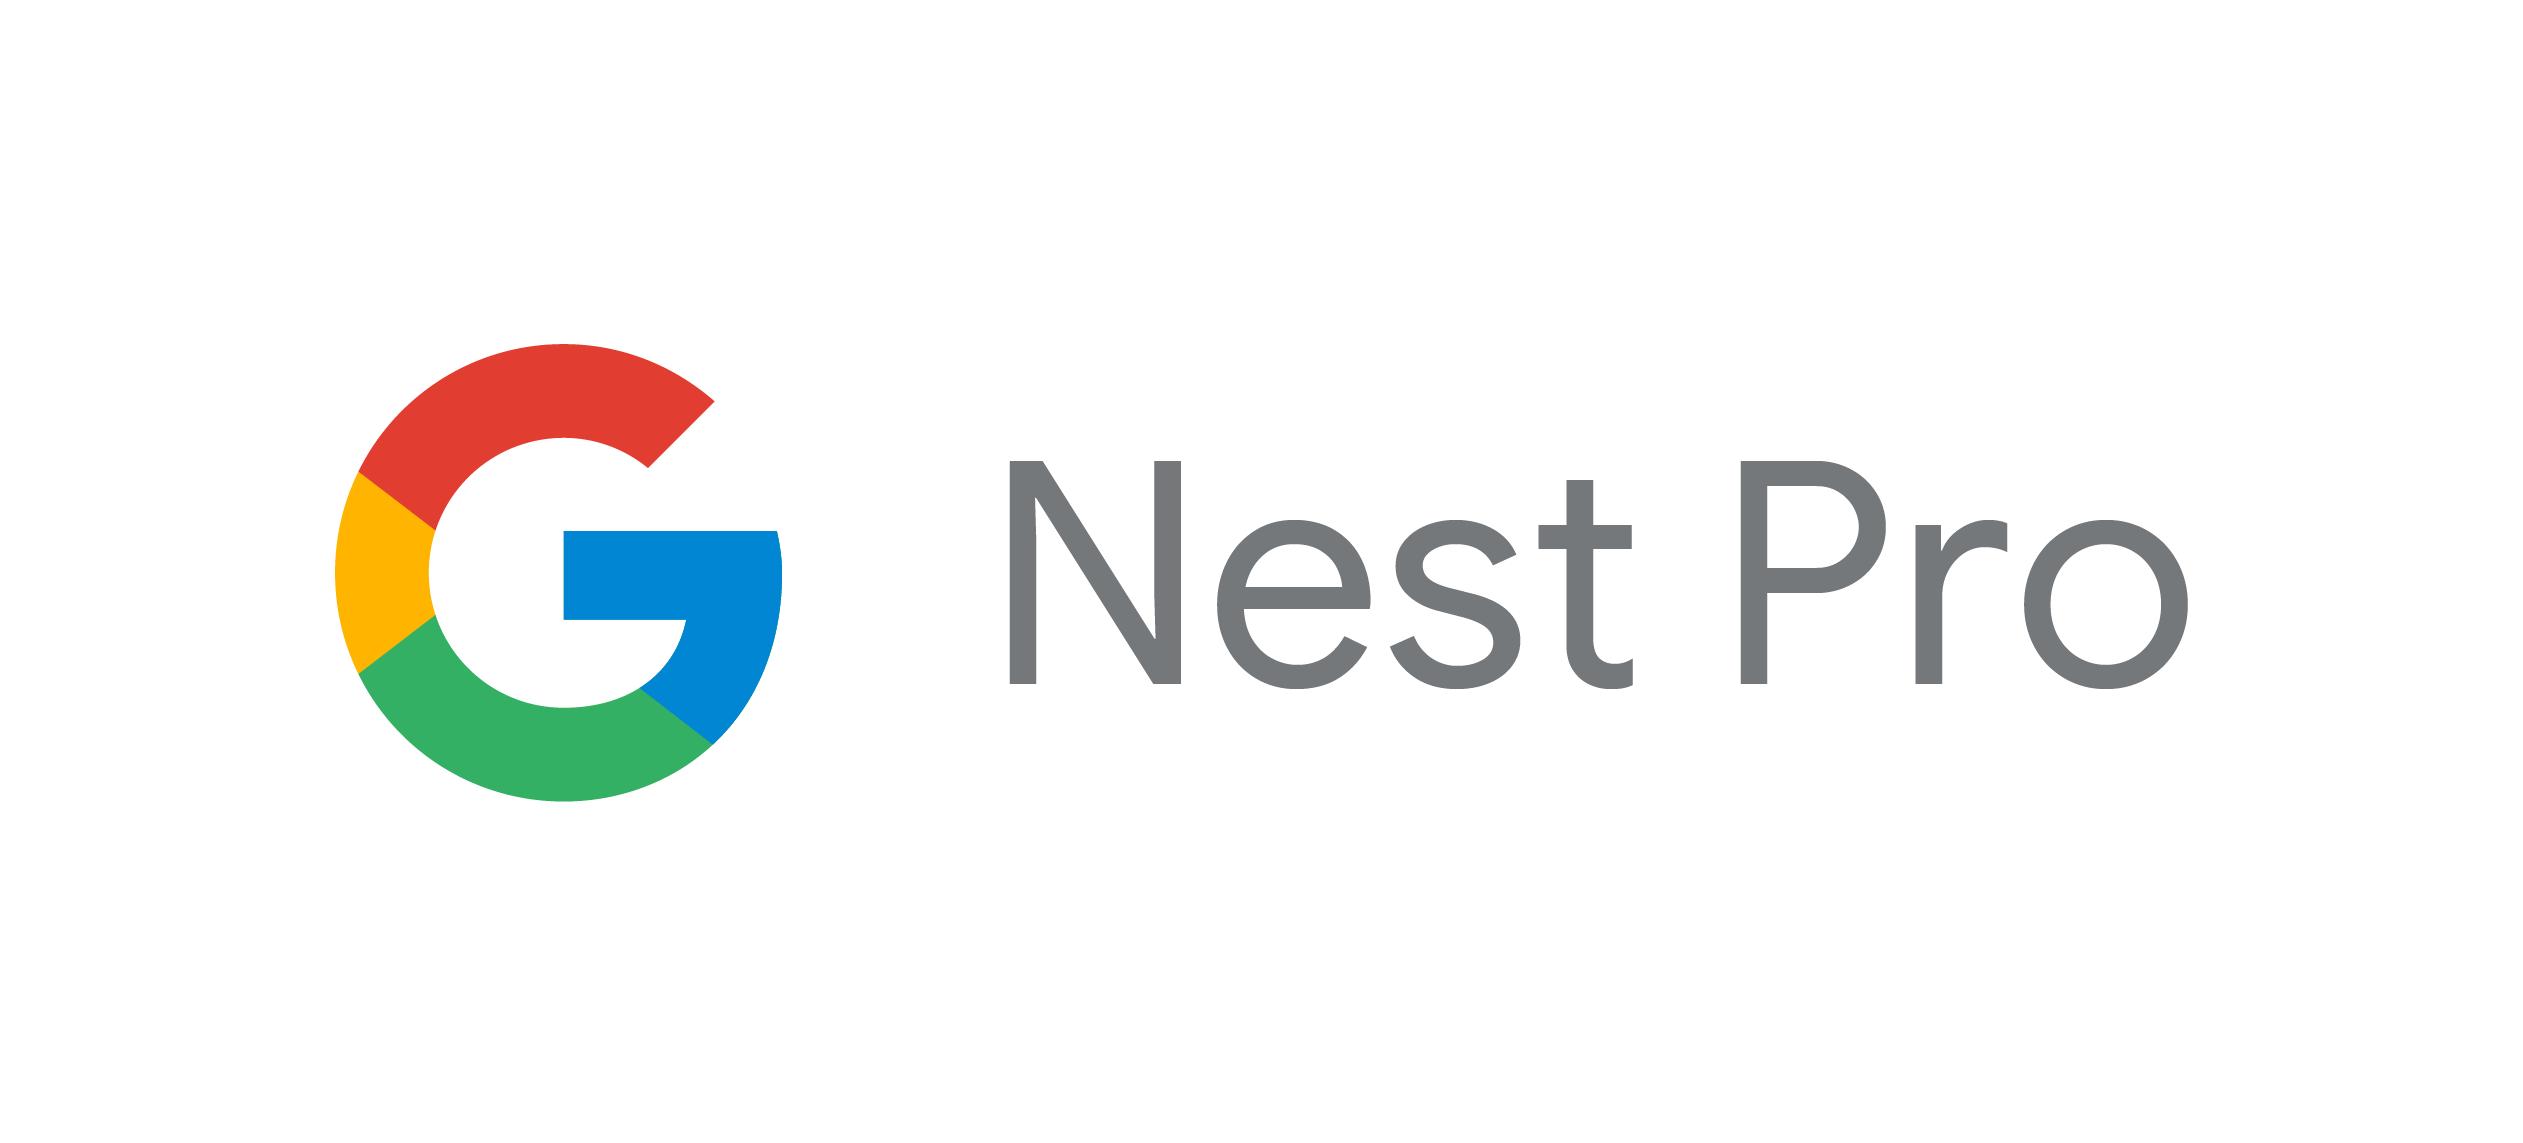 Does Nest offer installation?